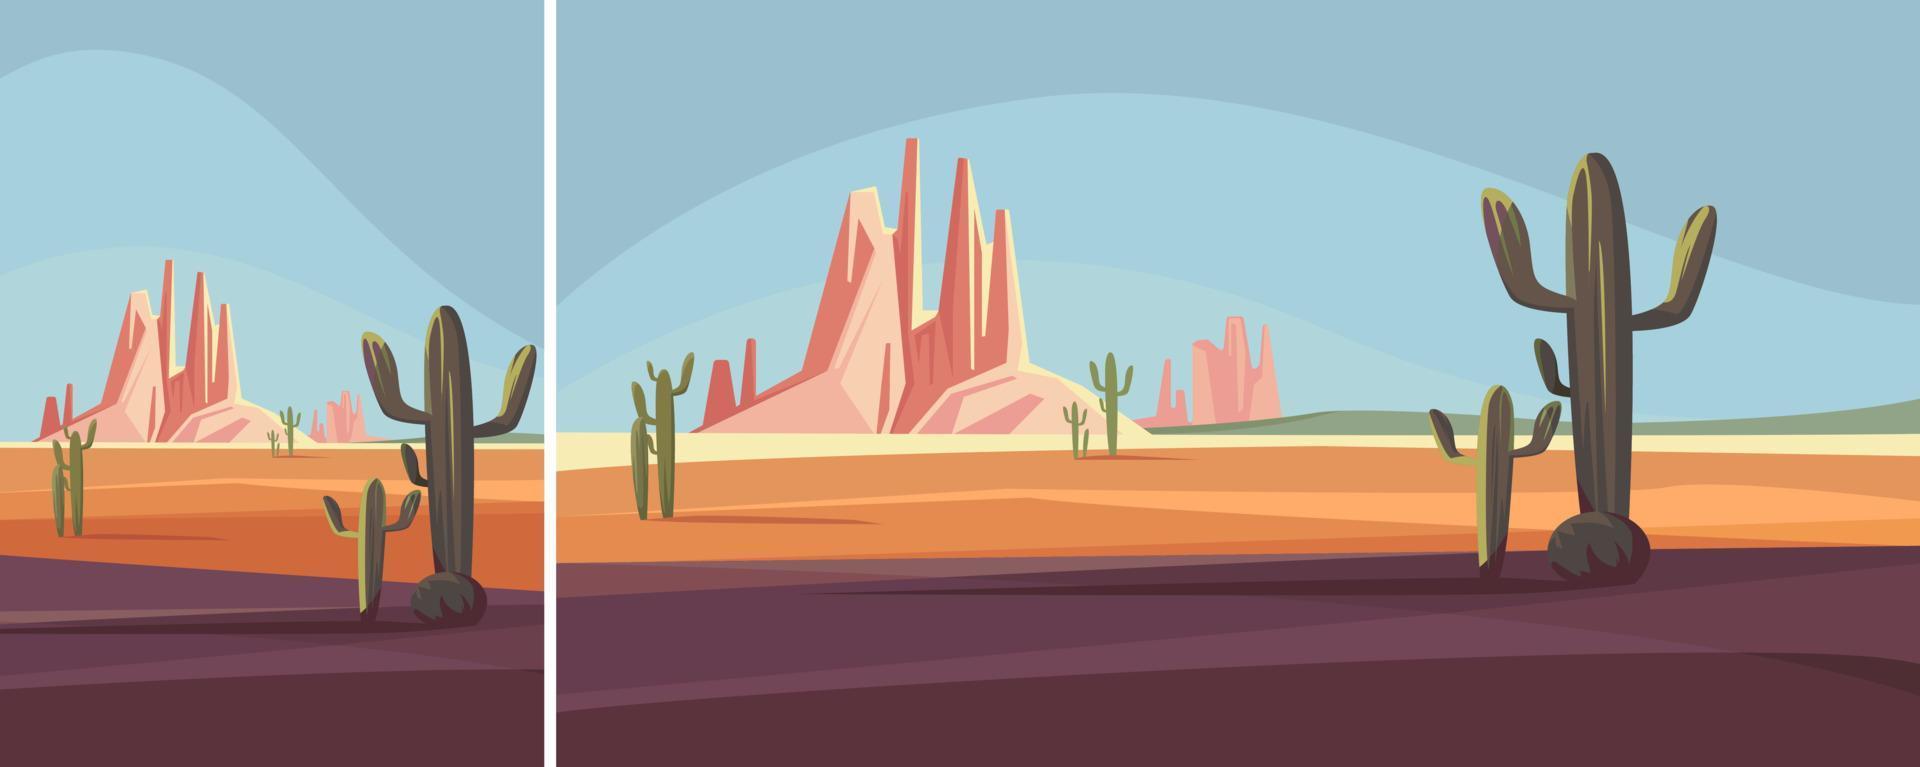 Arizona desert landscape. Natural scenery in different formats. vector